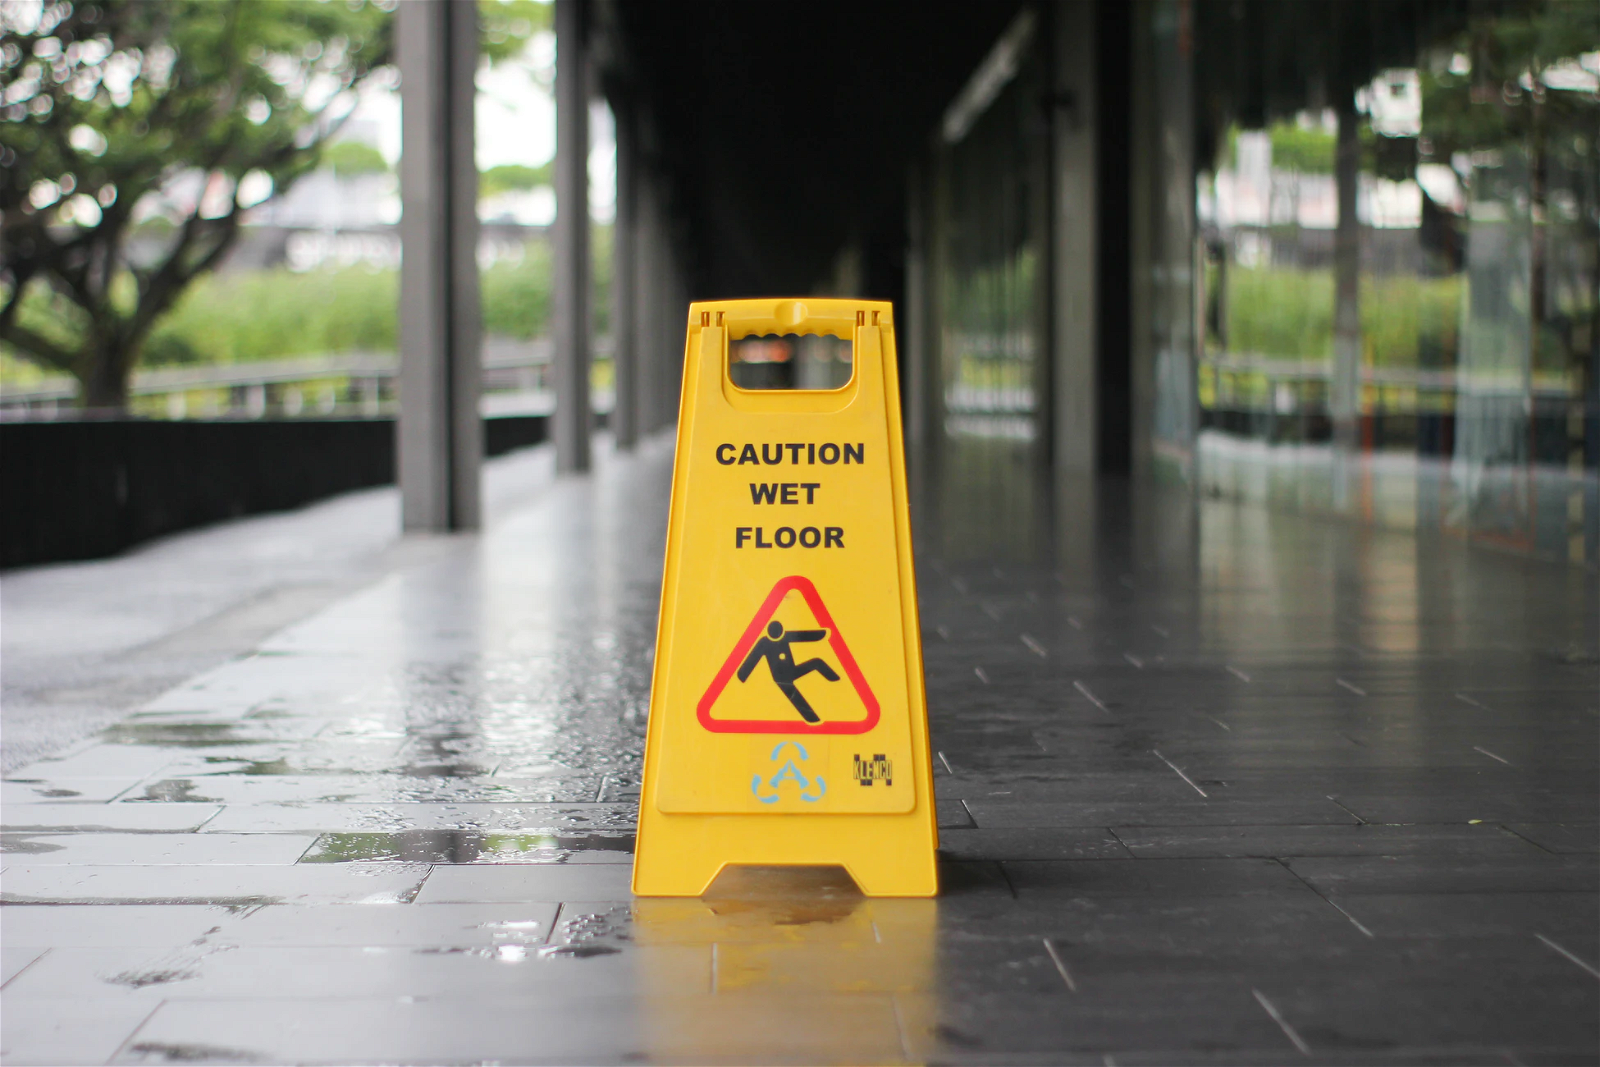 Caution sign sitting on wet floor